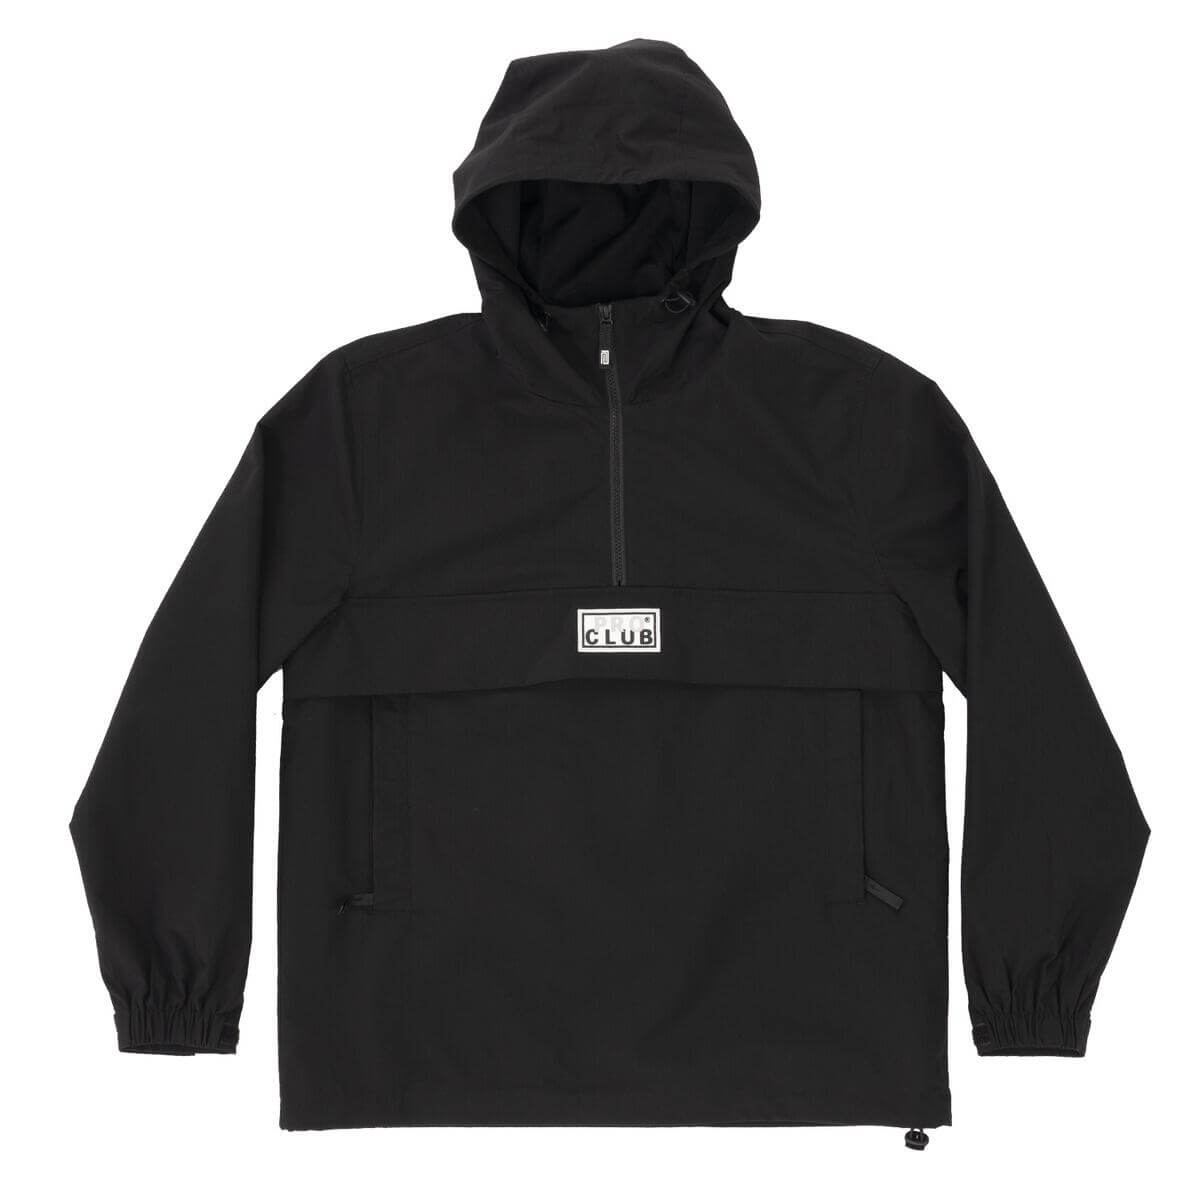 Pro Club - Men's Nylon Anorak Pullover Jacket - Black